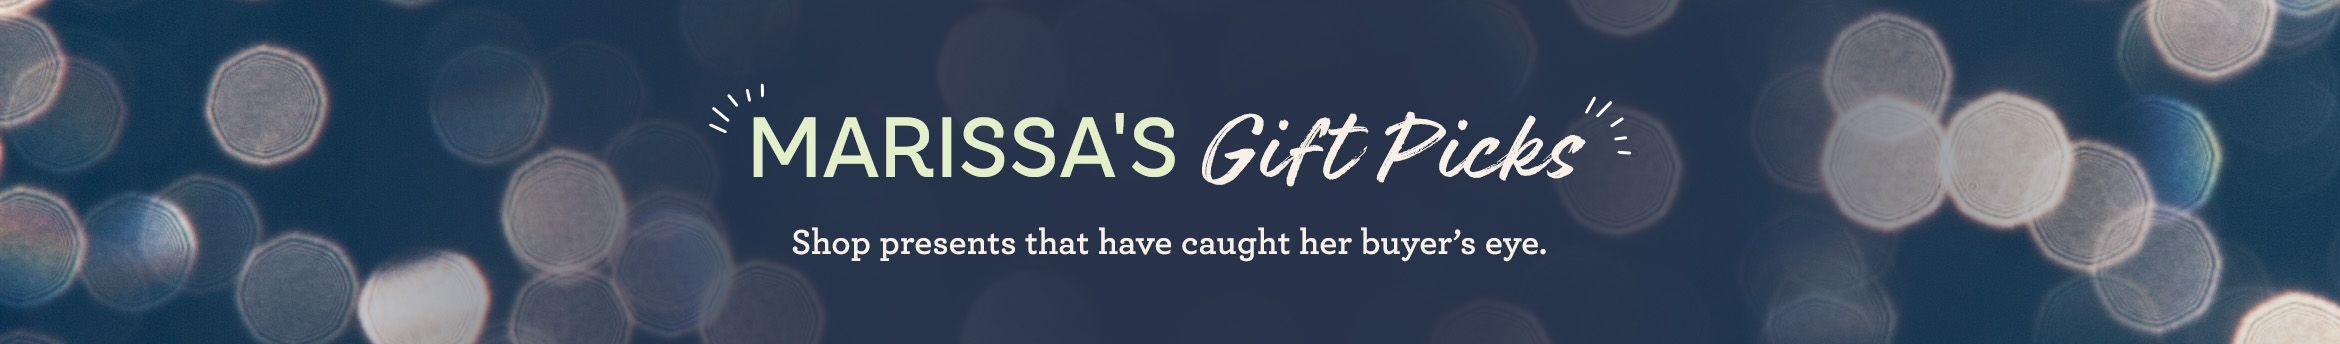 Marissa's Gift Picks Shop presents that have caught her buyer's eye.